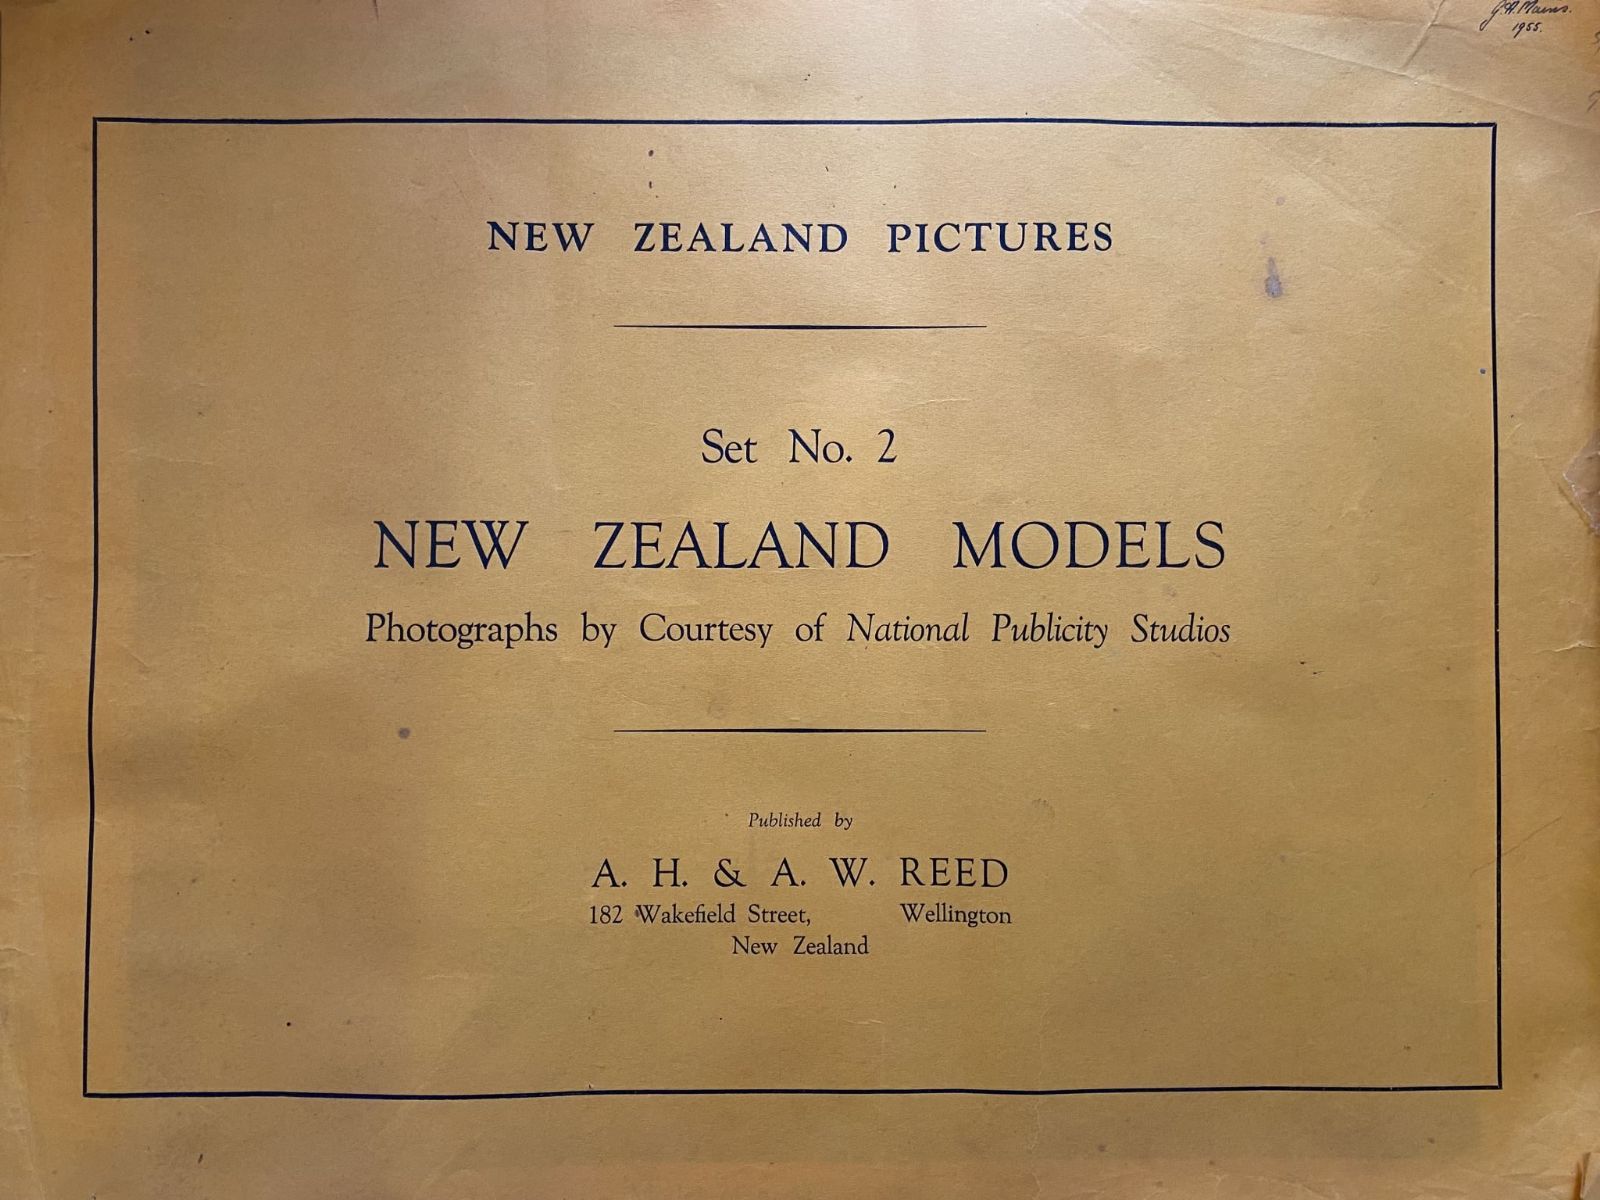 NEW ZEALAND PICTURES - Set No. 2 - New Zealand Models